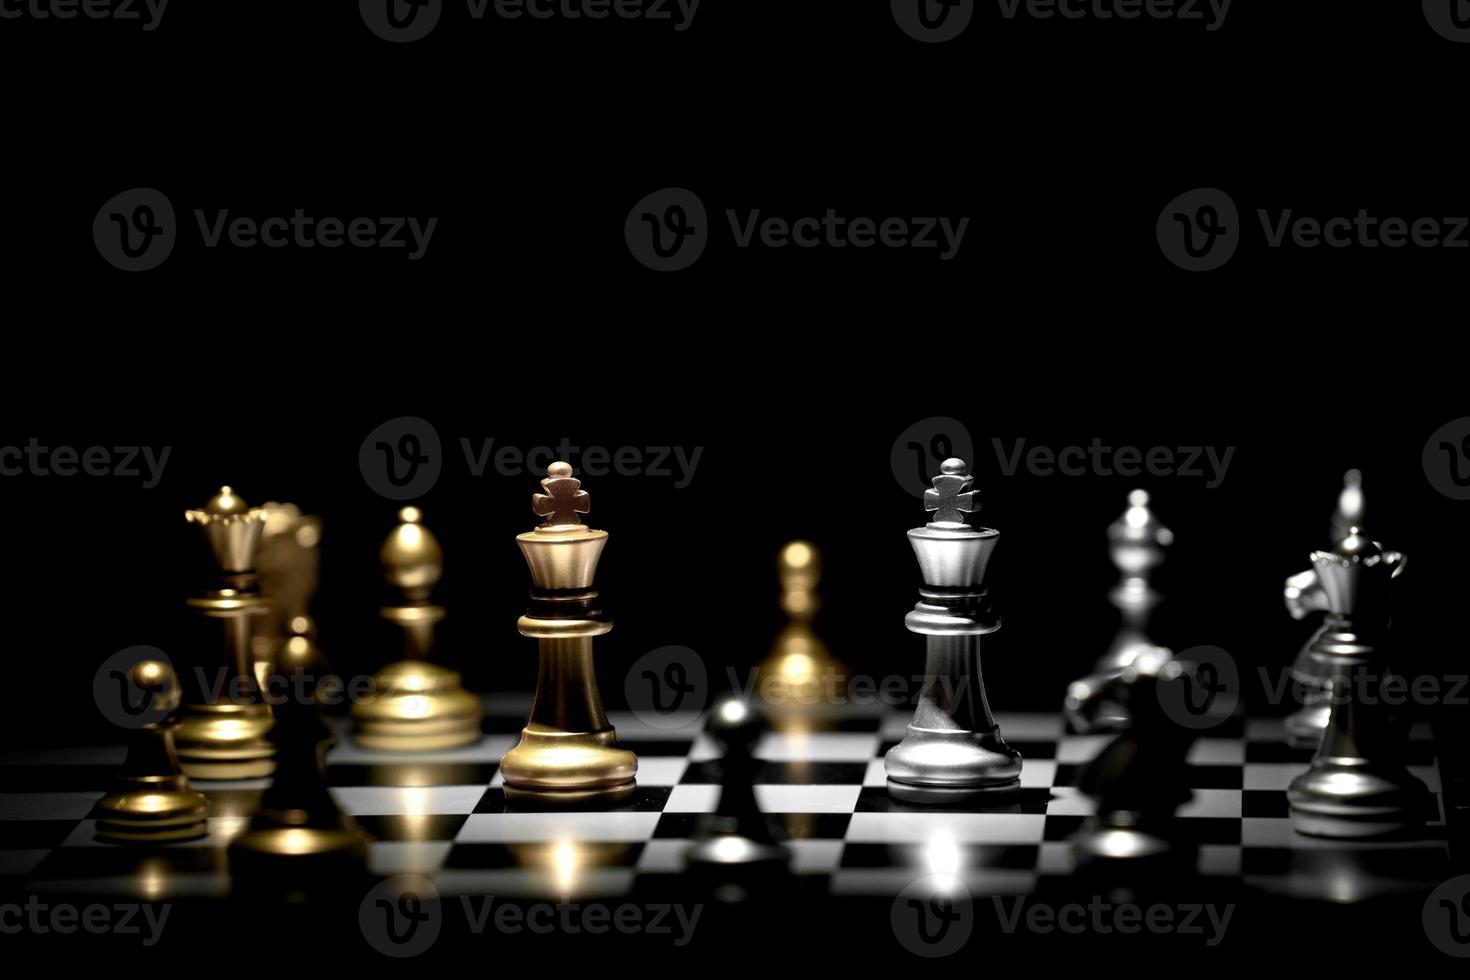 Estrategia: A estrategia no xadrez